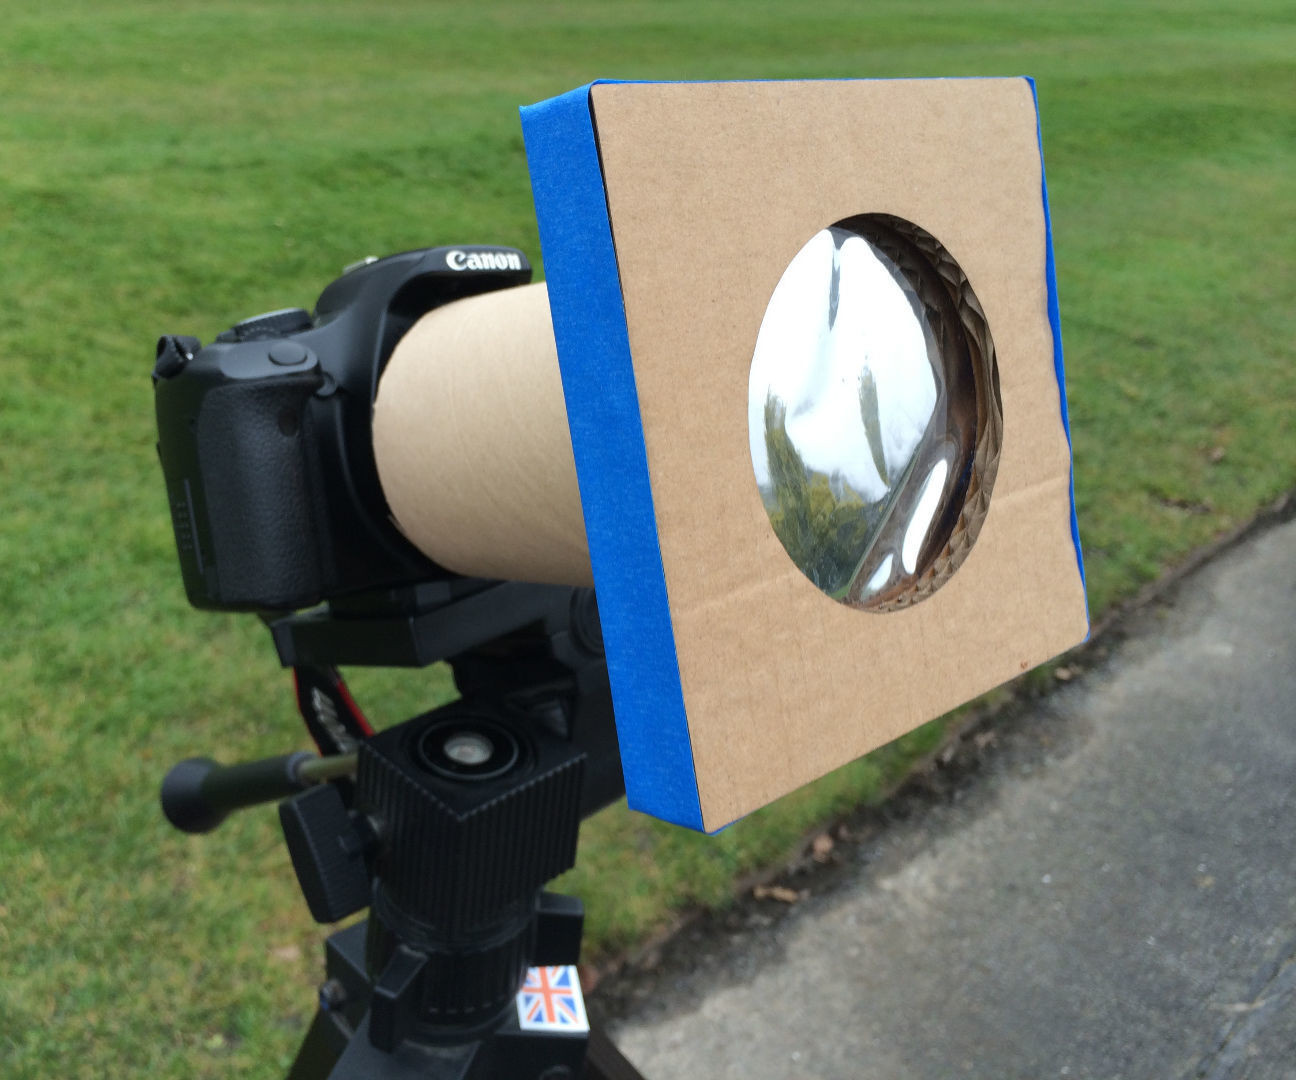 Best ideas about DIY Solar Eclipse Viewer
. Save or Pin DIY Solar Eclipse Viewers 2 Now.